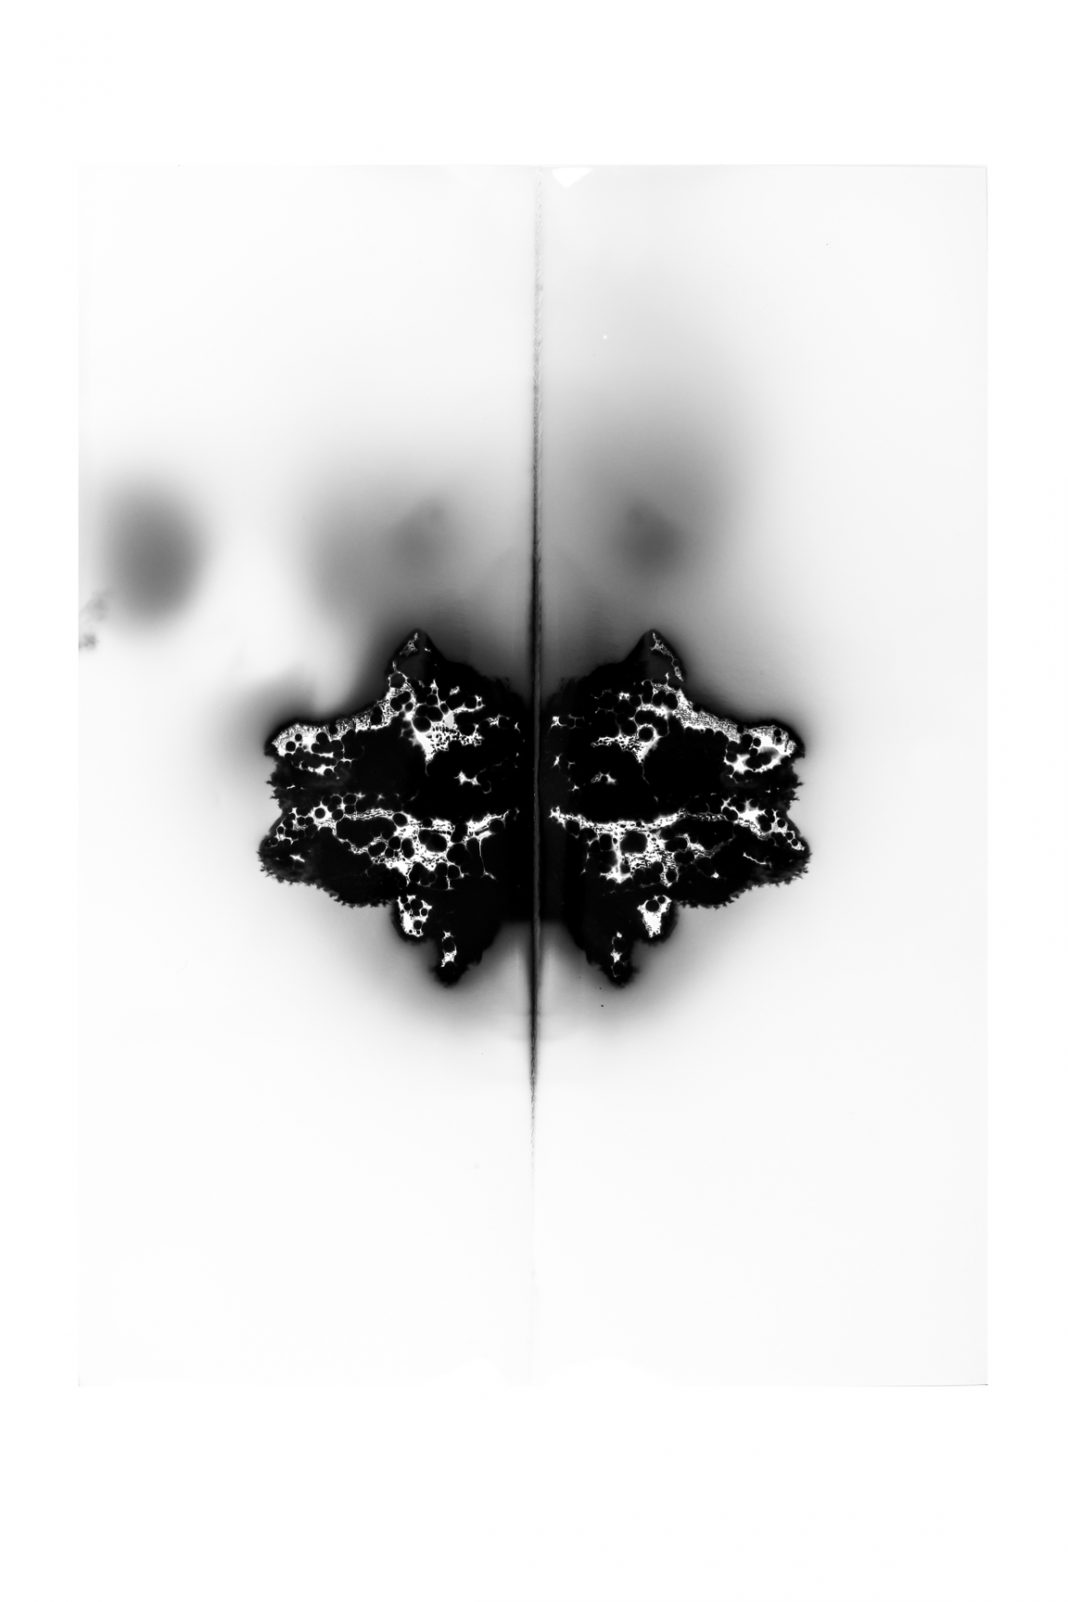 Elia Cantori – Shadow in processhttps://www.exibart.com/repository/media/formidable/11/Elia-Cantori-Untitled-Photopsyche-2018-2019-direct-impression-on-light-sensitive-paper-CAR-DRDE-Bologna-1068x1602.jpg